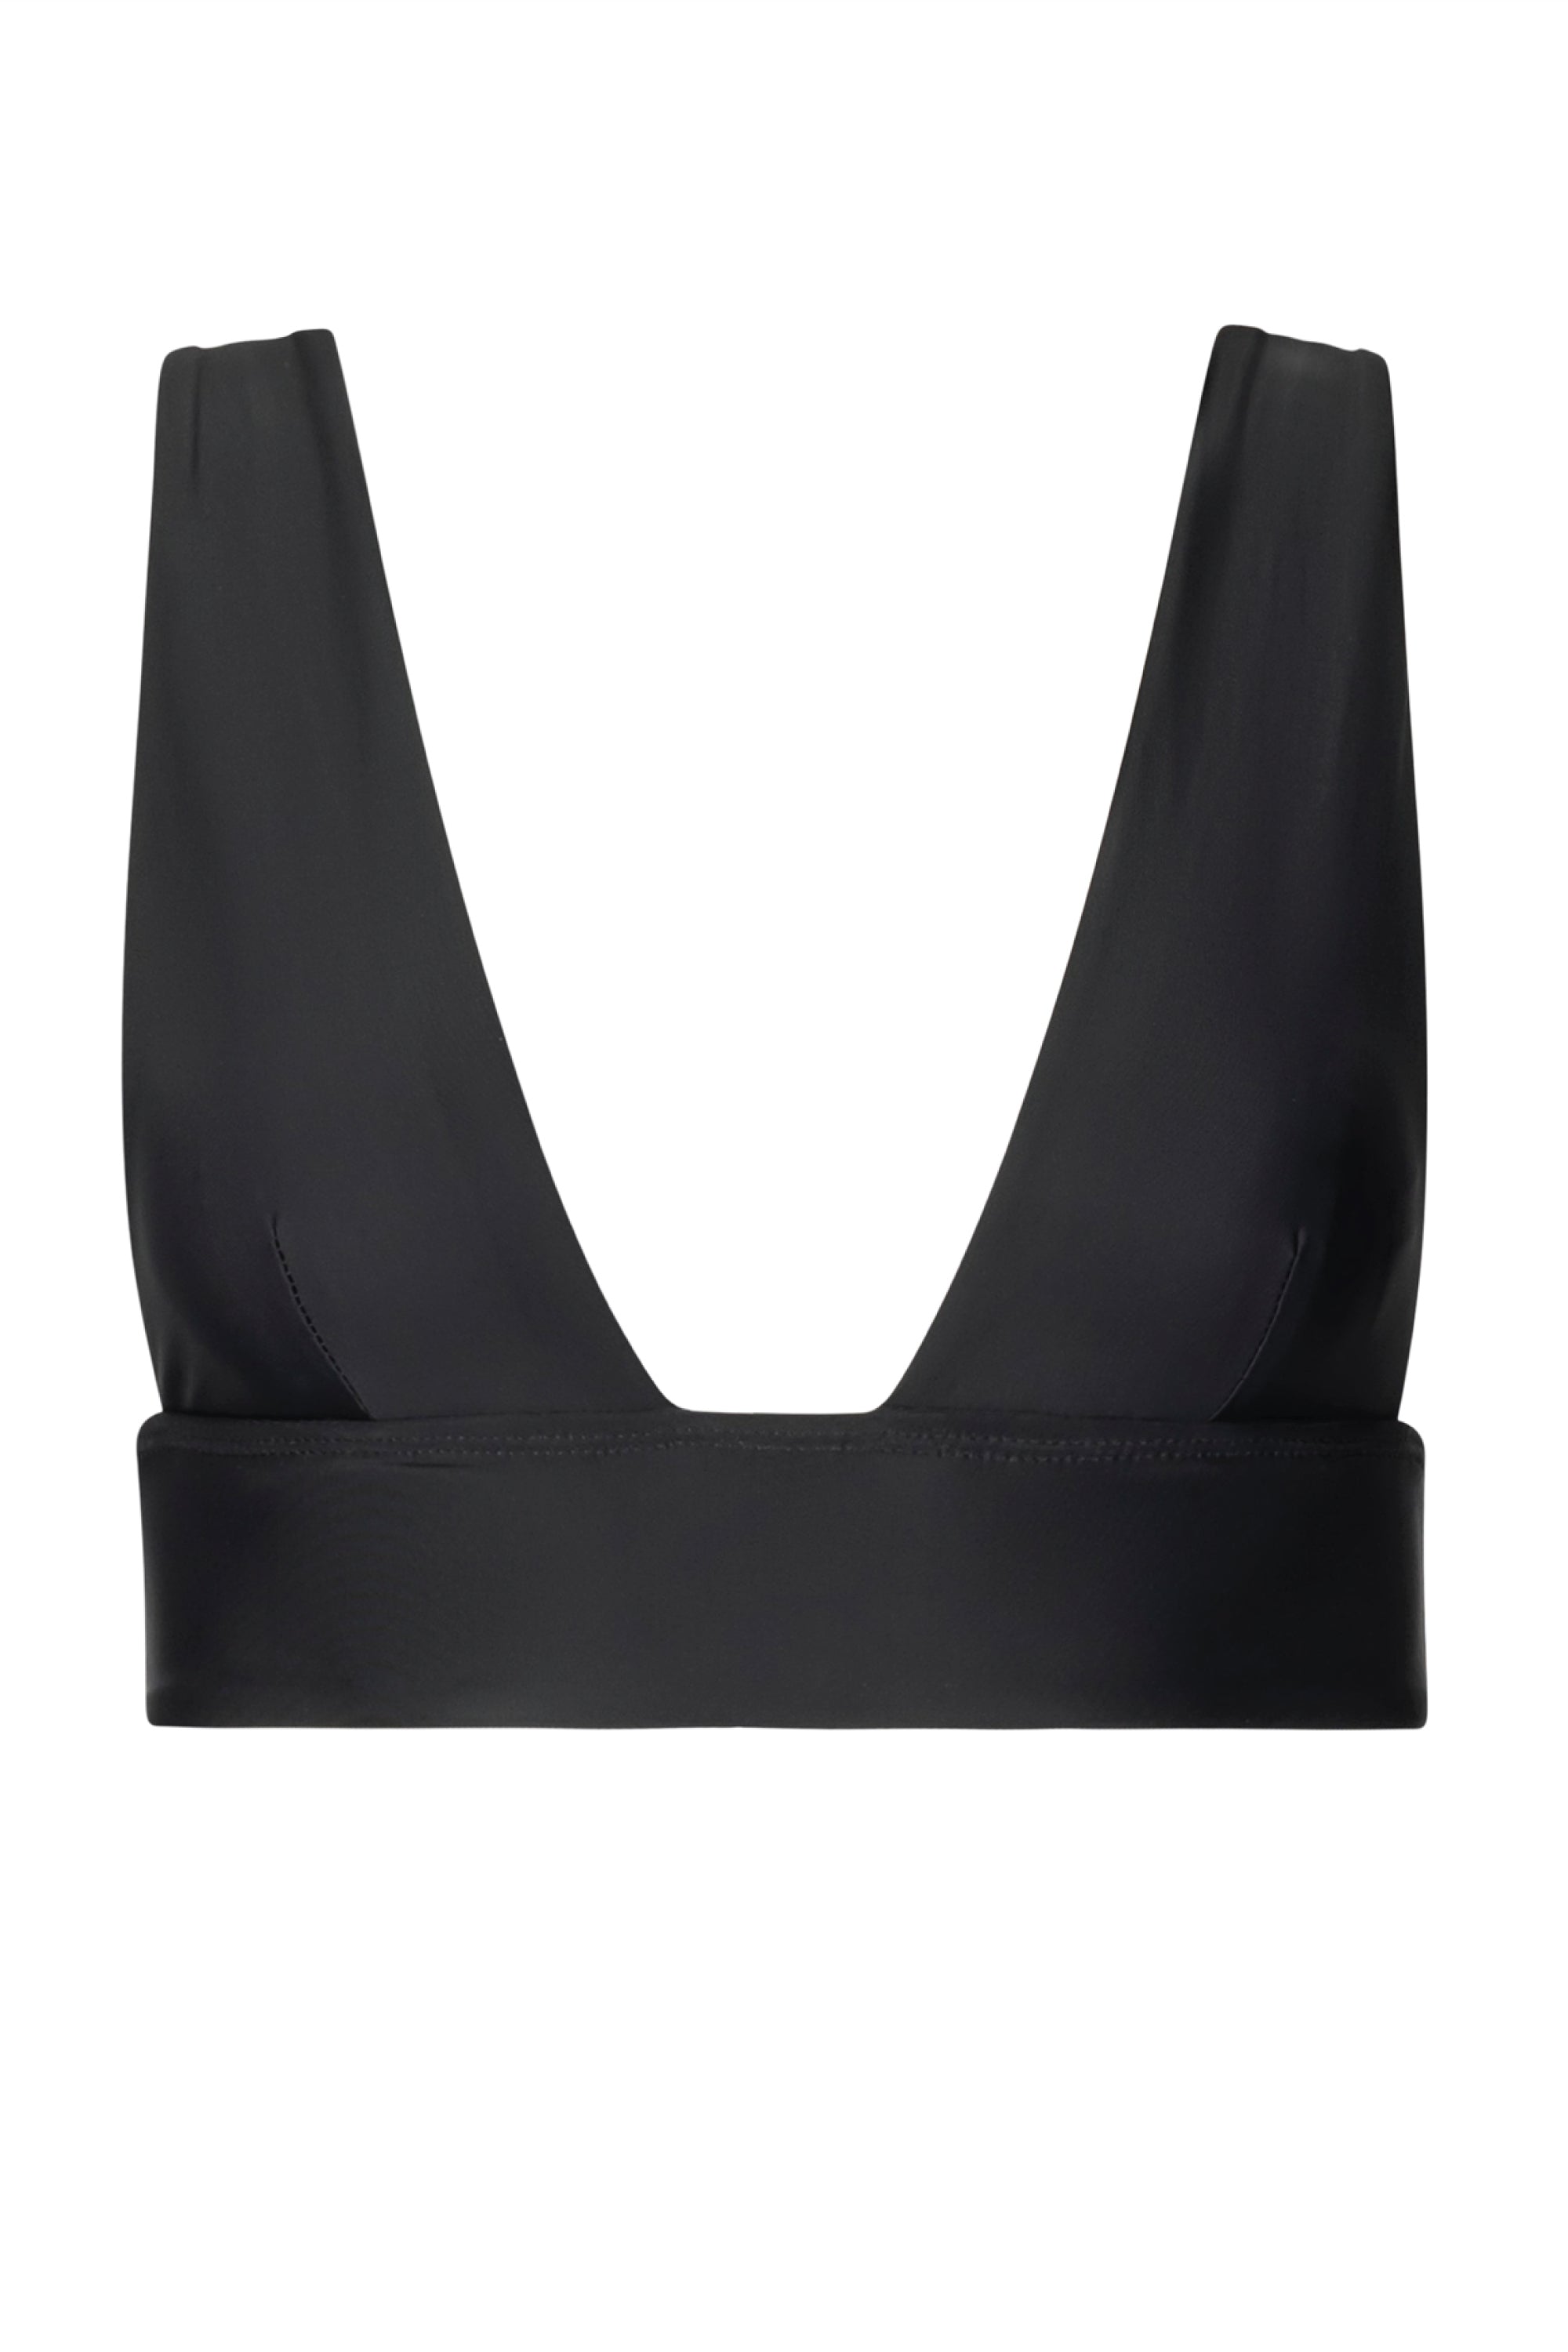 Escante Women's Thick Band Bikini Top, Black, One Size 